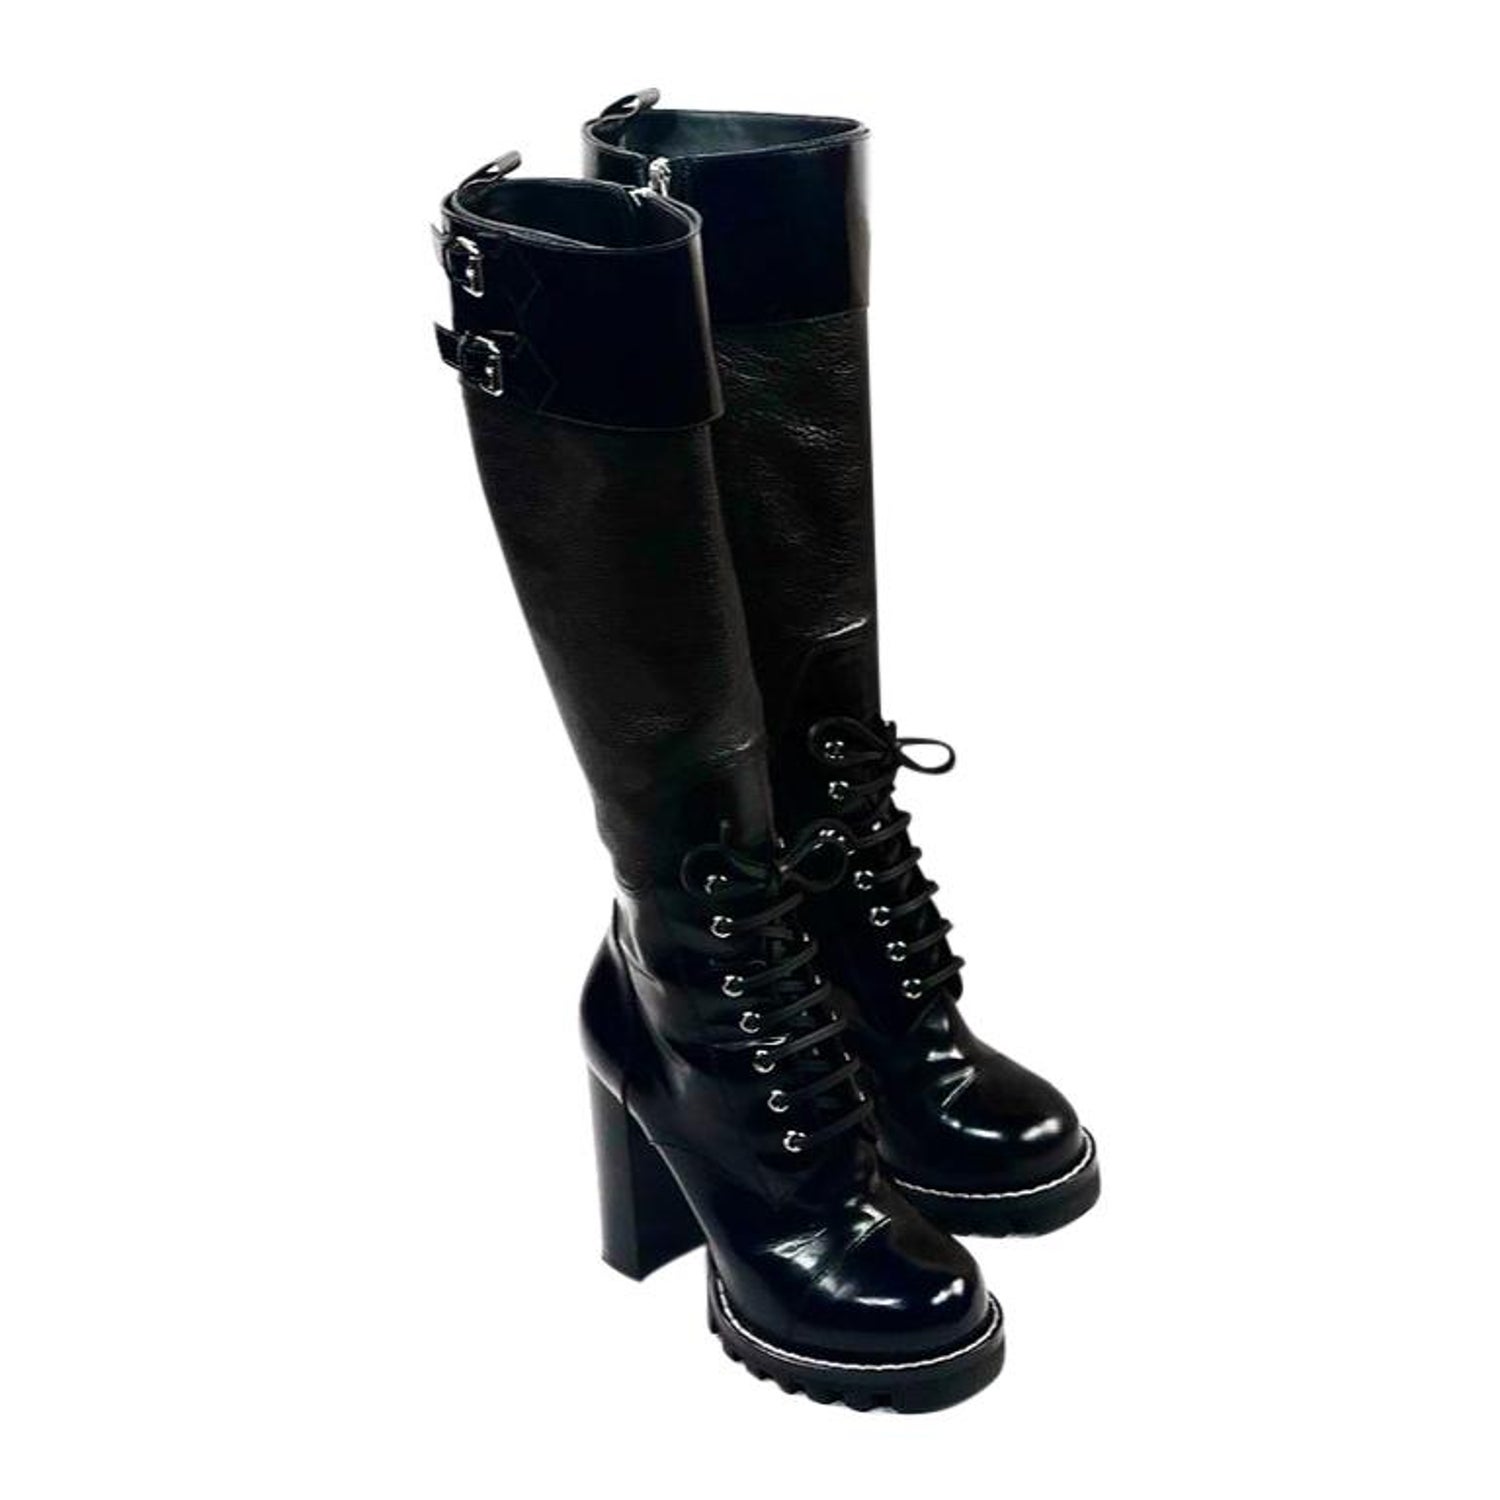 1" block heeled boots  list price $56 Details about    Mata AURORA  Beige Snake  military-look 